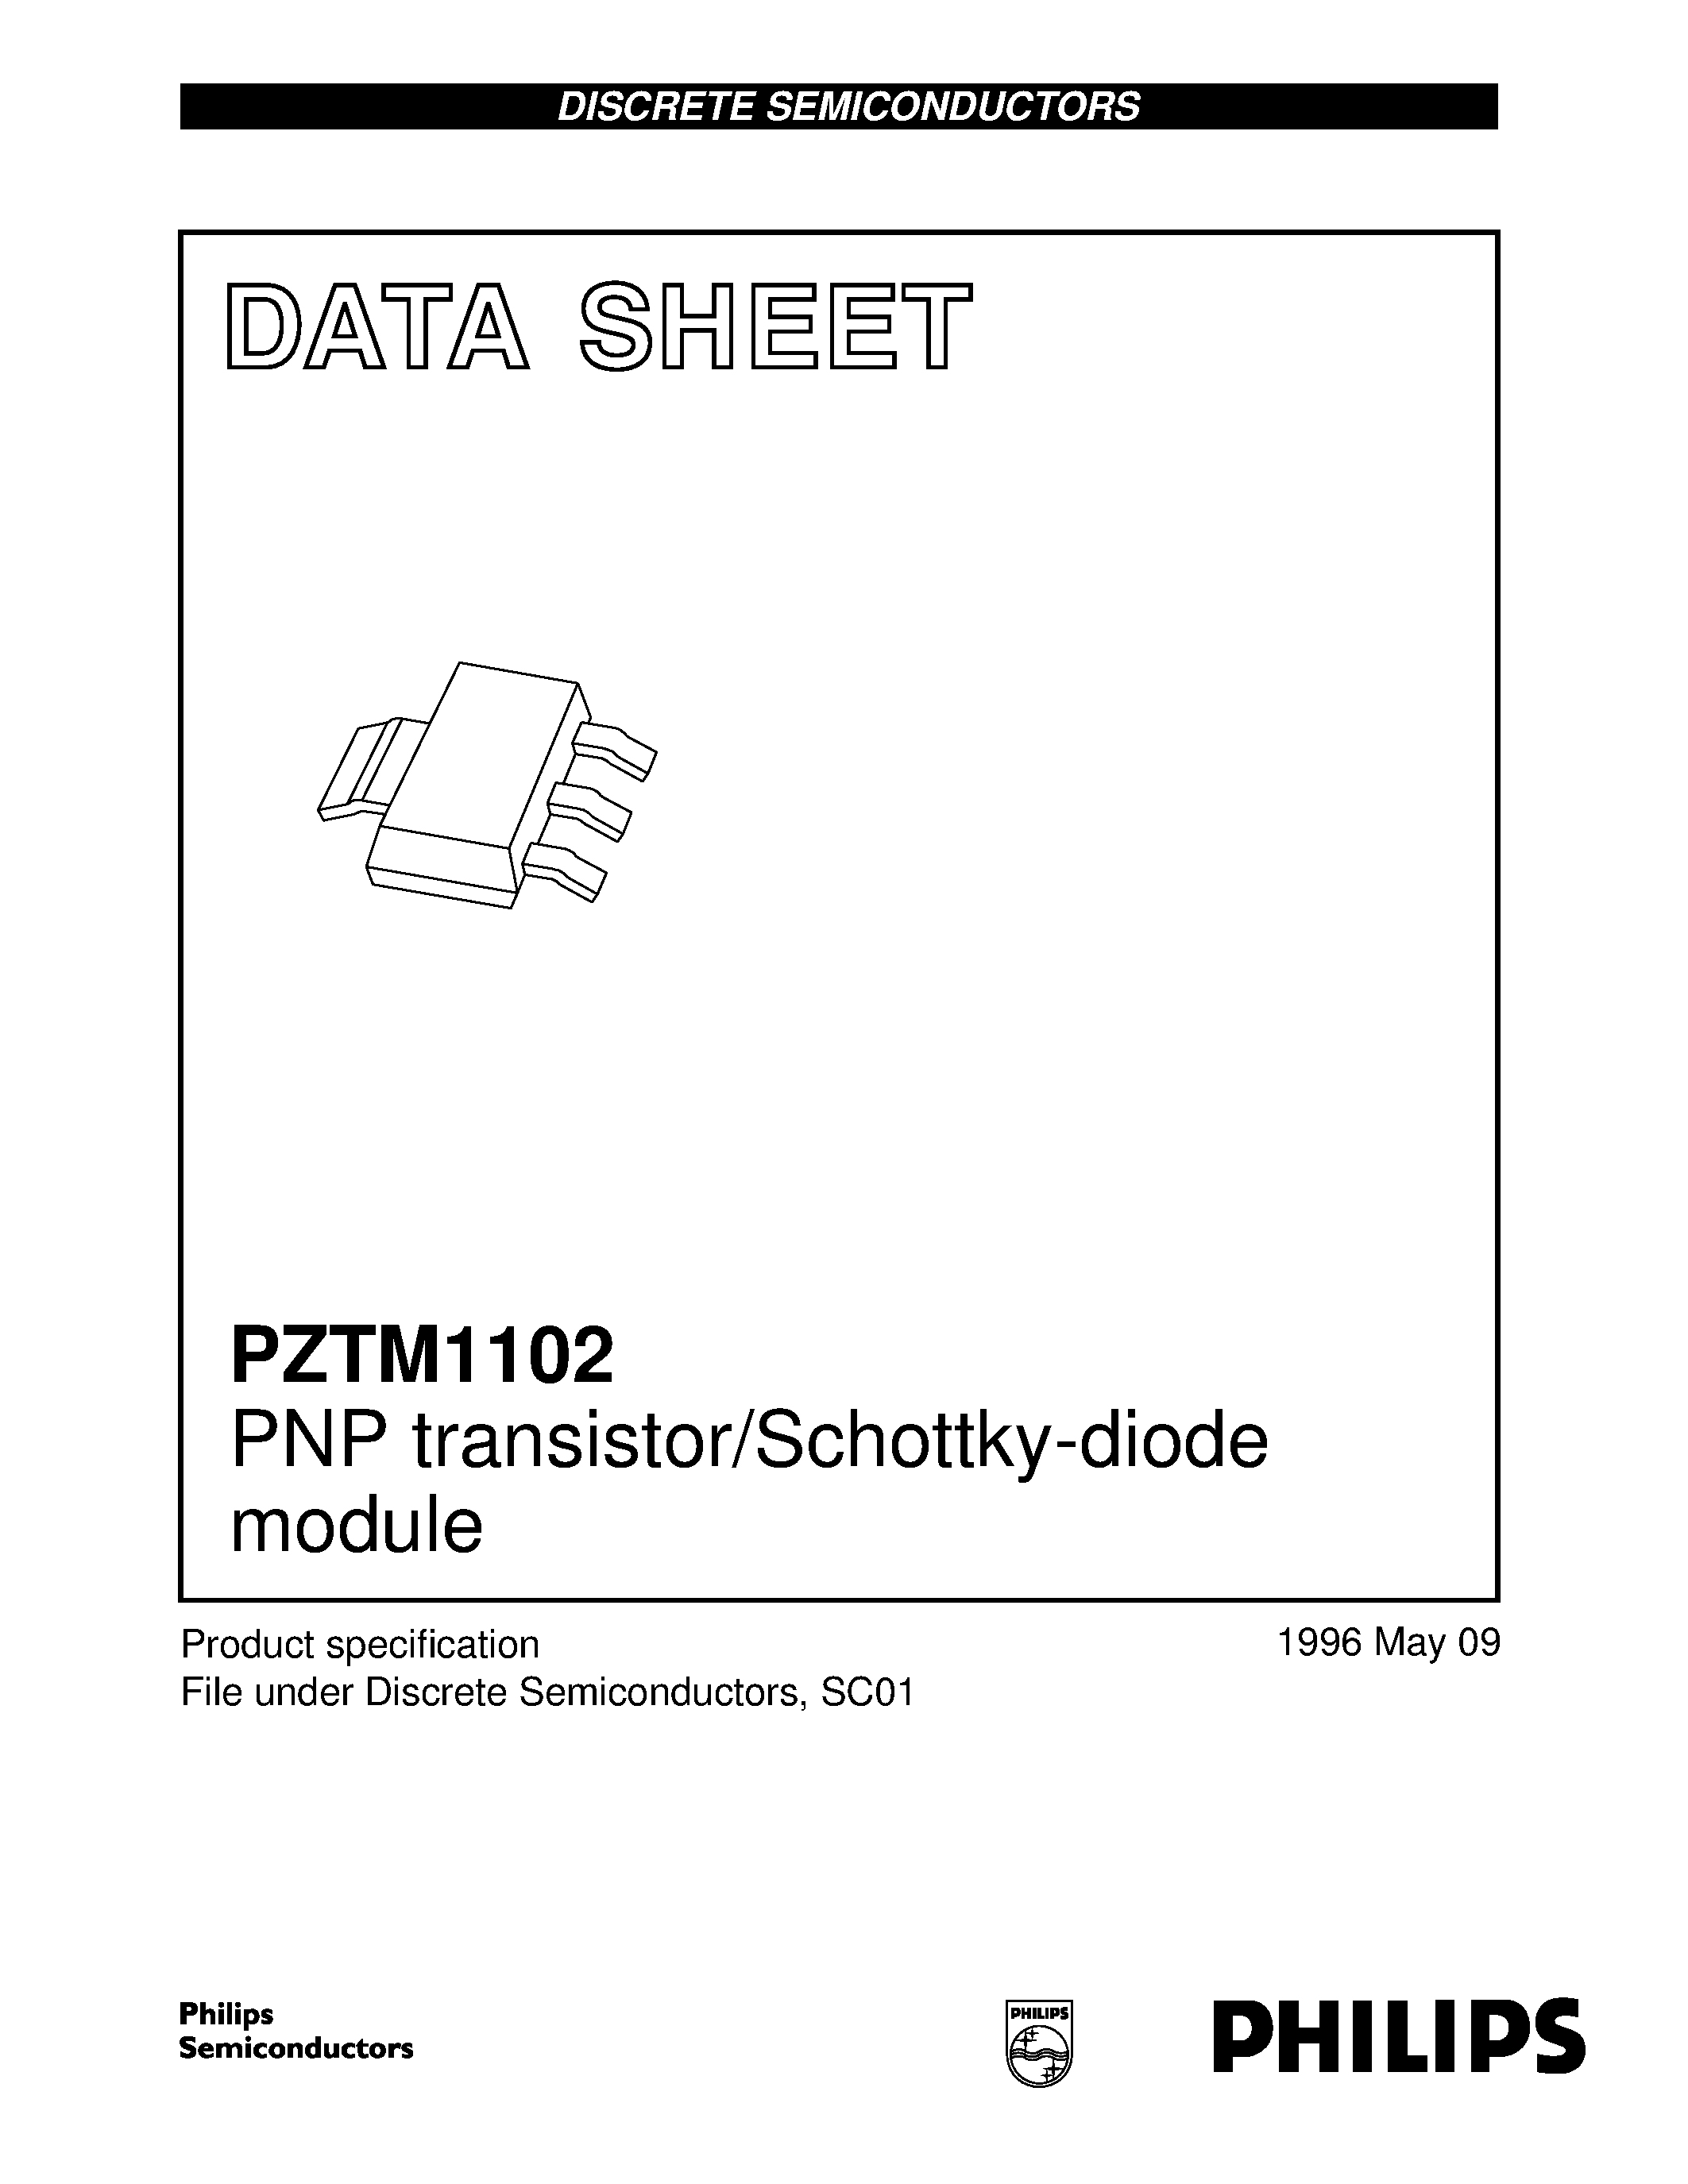 Даташит PZTM1102 - PNP transistor/Schottky-diode module страница 1